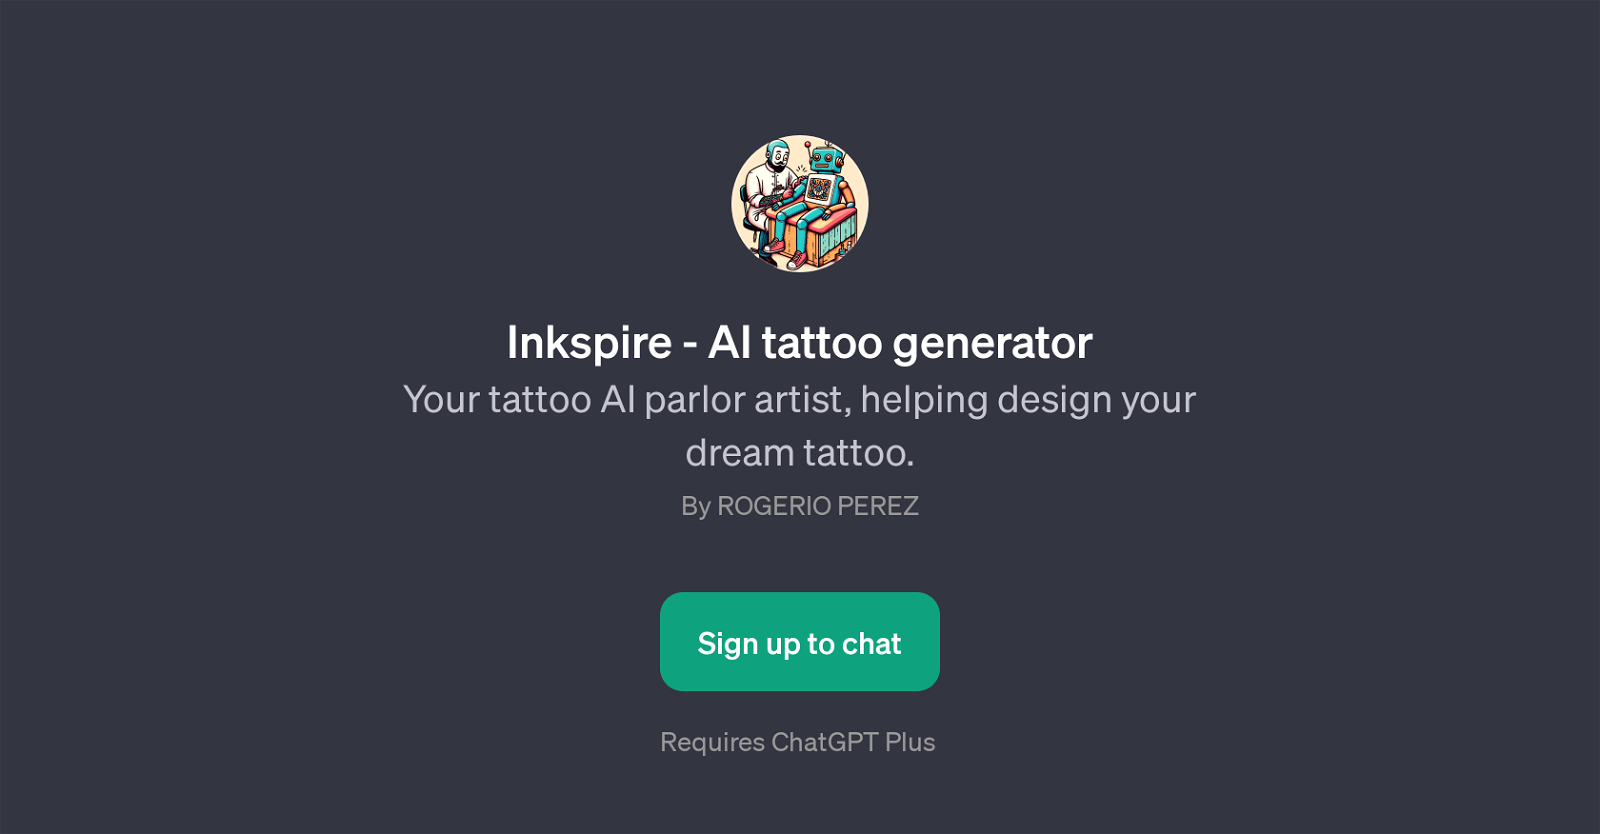 Design your Tattoo - Custom Tattoo Design Services | Upwork